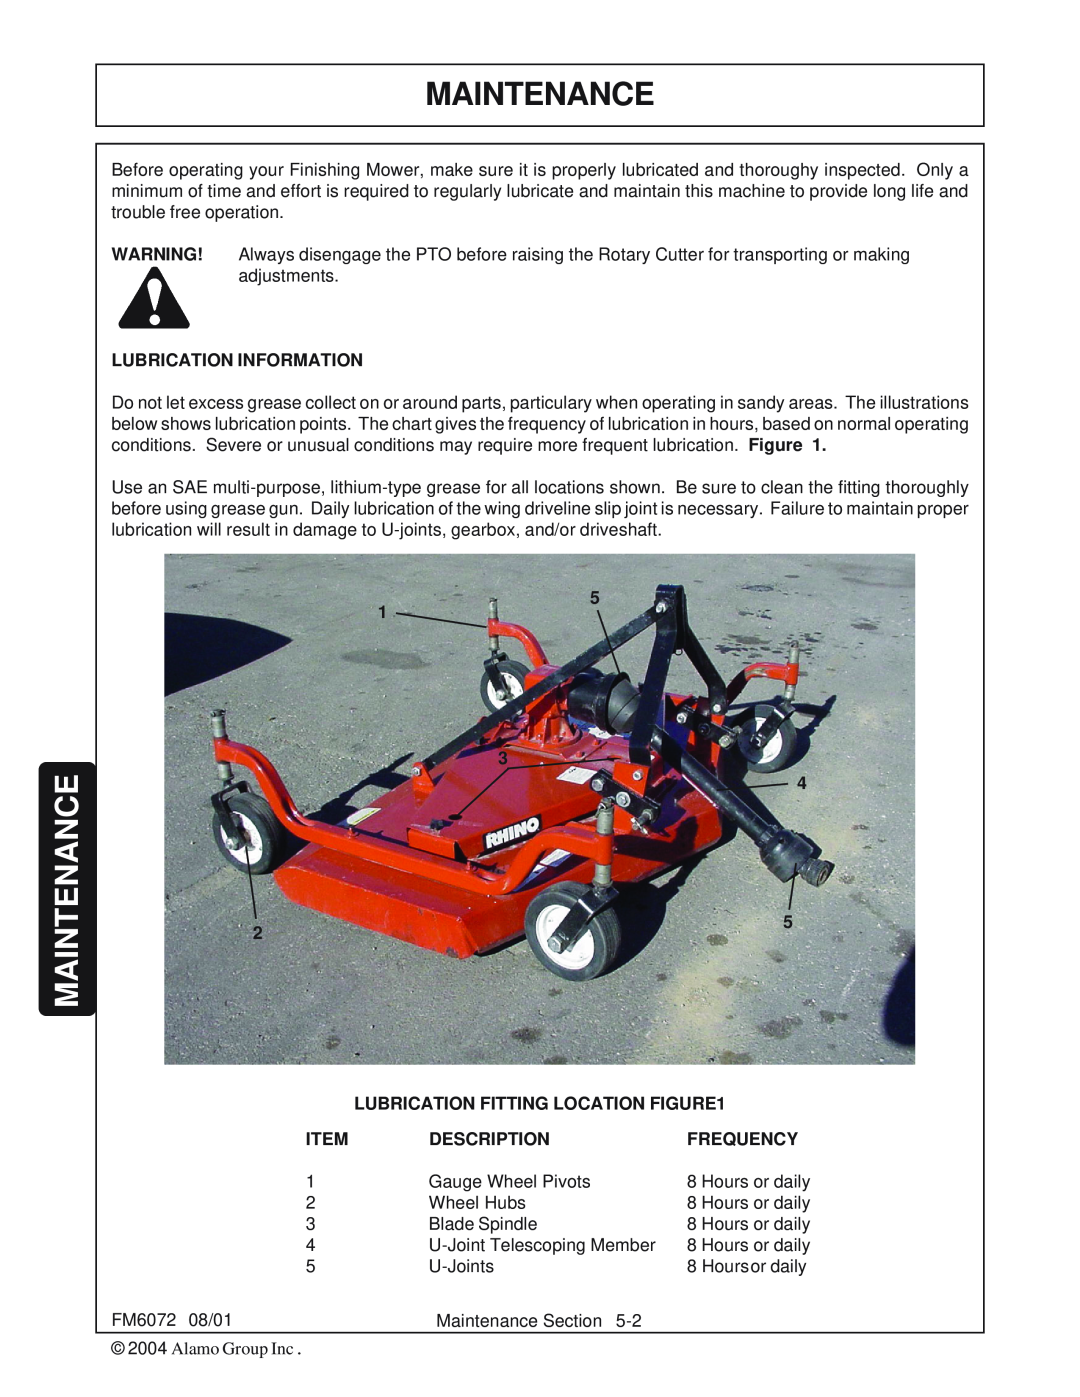 Servis-Rhino FM60/72 manual Maintenance, Lubrication Information, Lubrication Fitting Location, Description, Frequency 